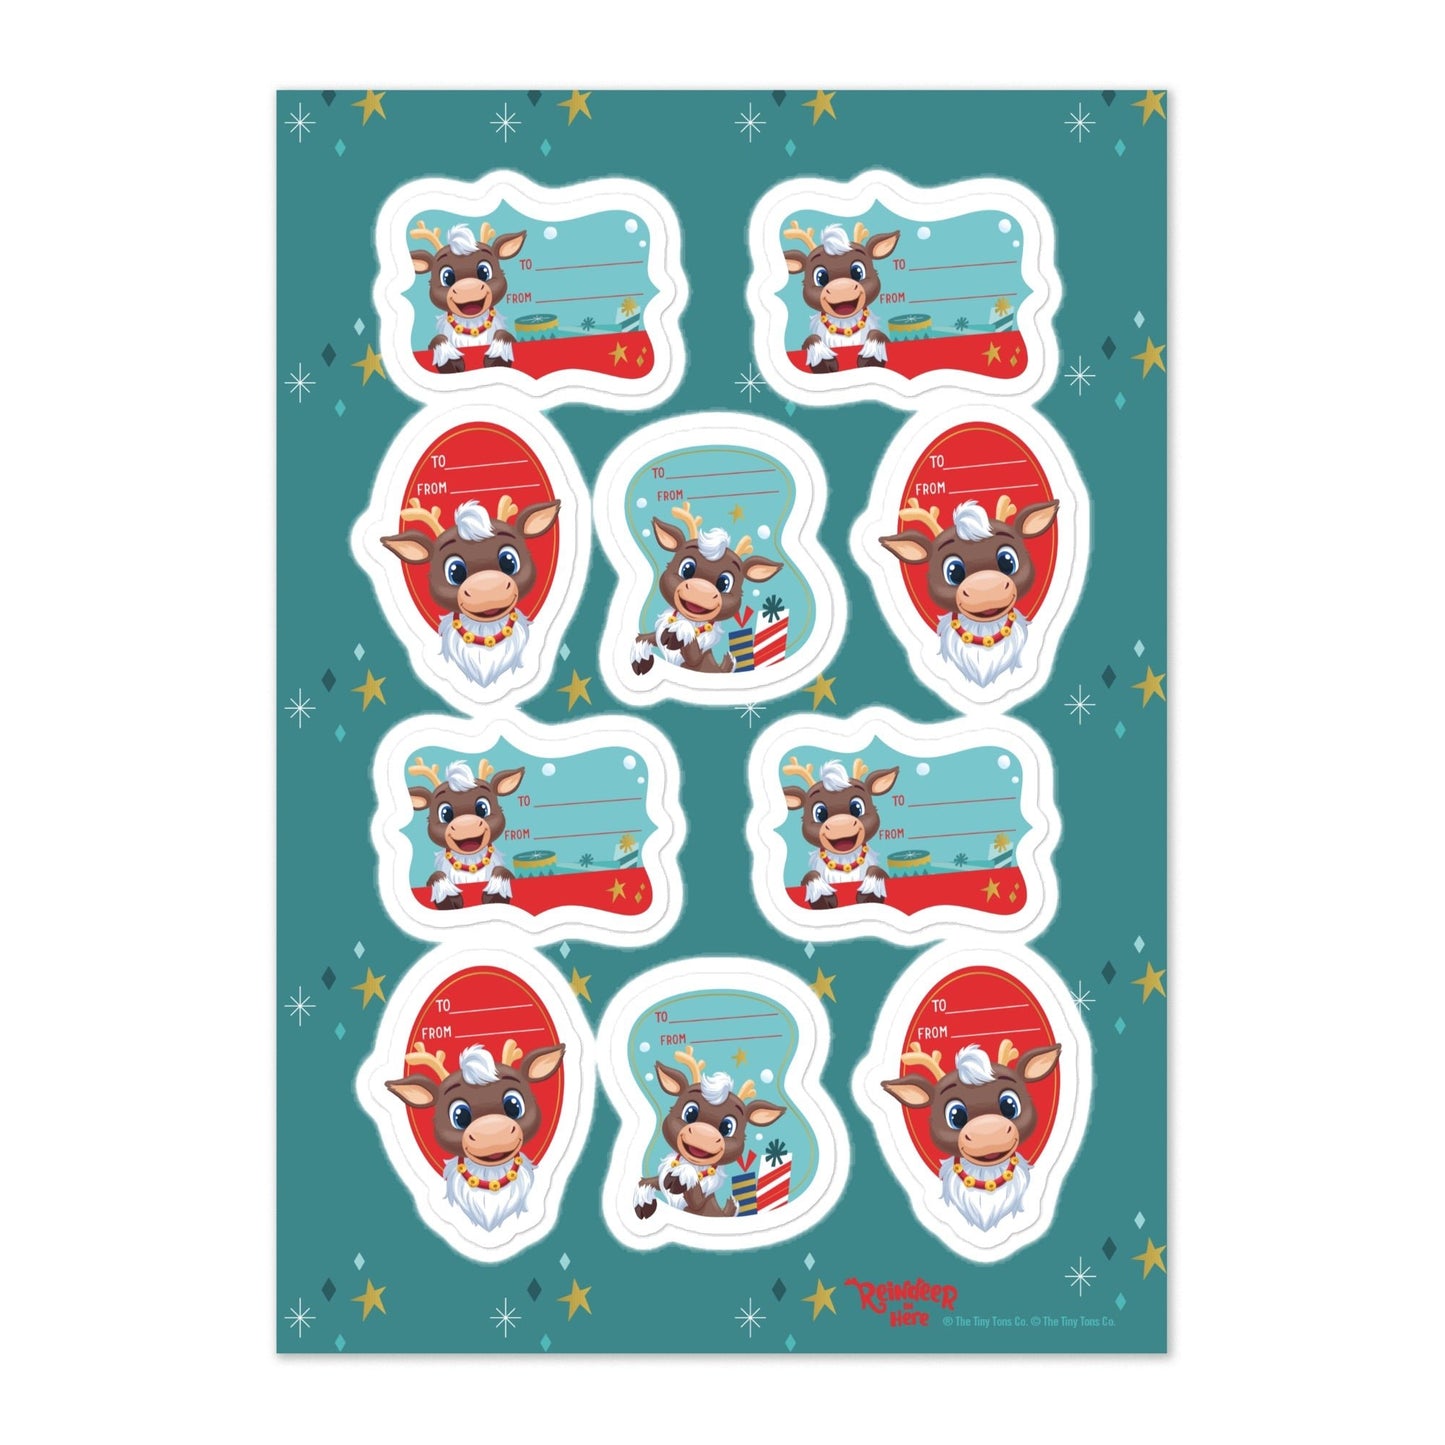 Reindeer in Here Gift Label Sticker Sheet - Paramount Shop